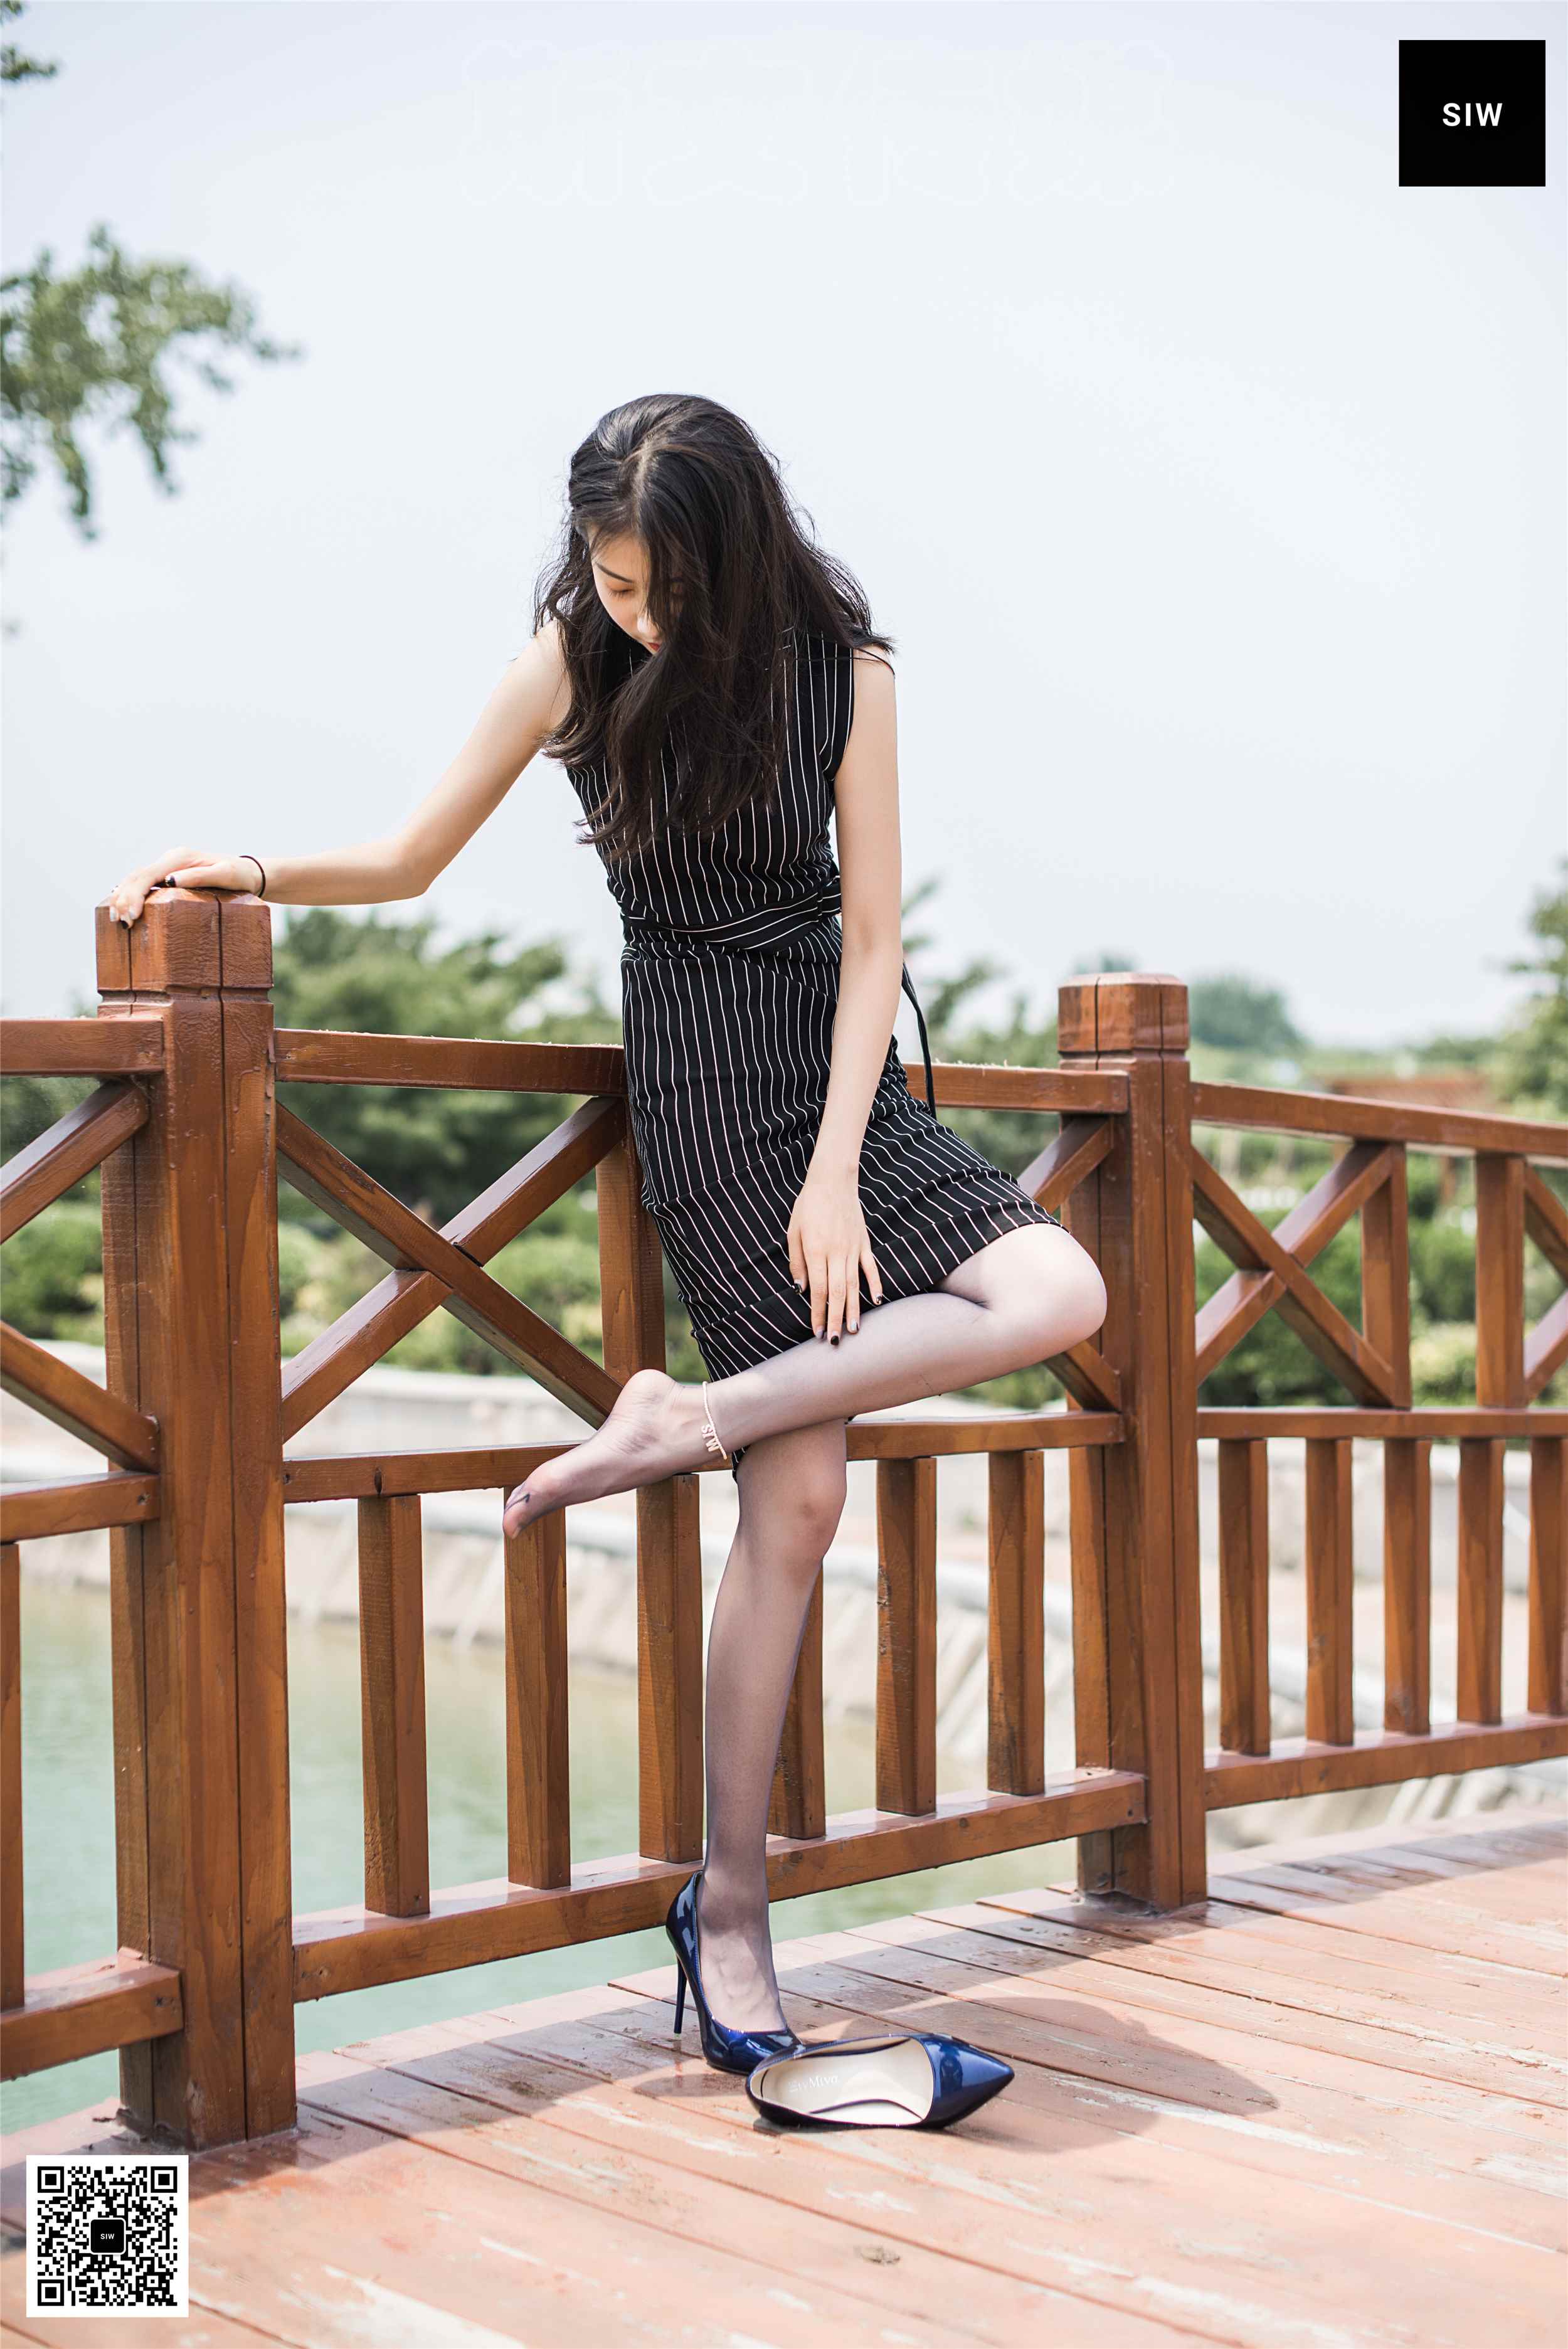 China Beauty Legs and feet 48